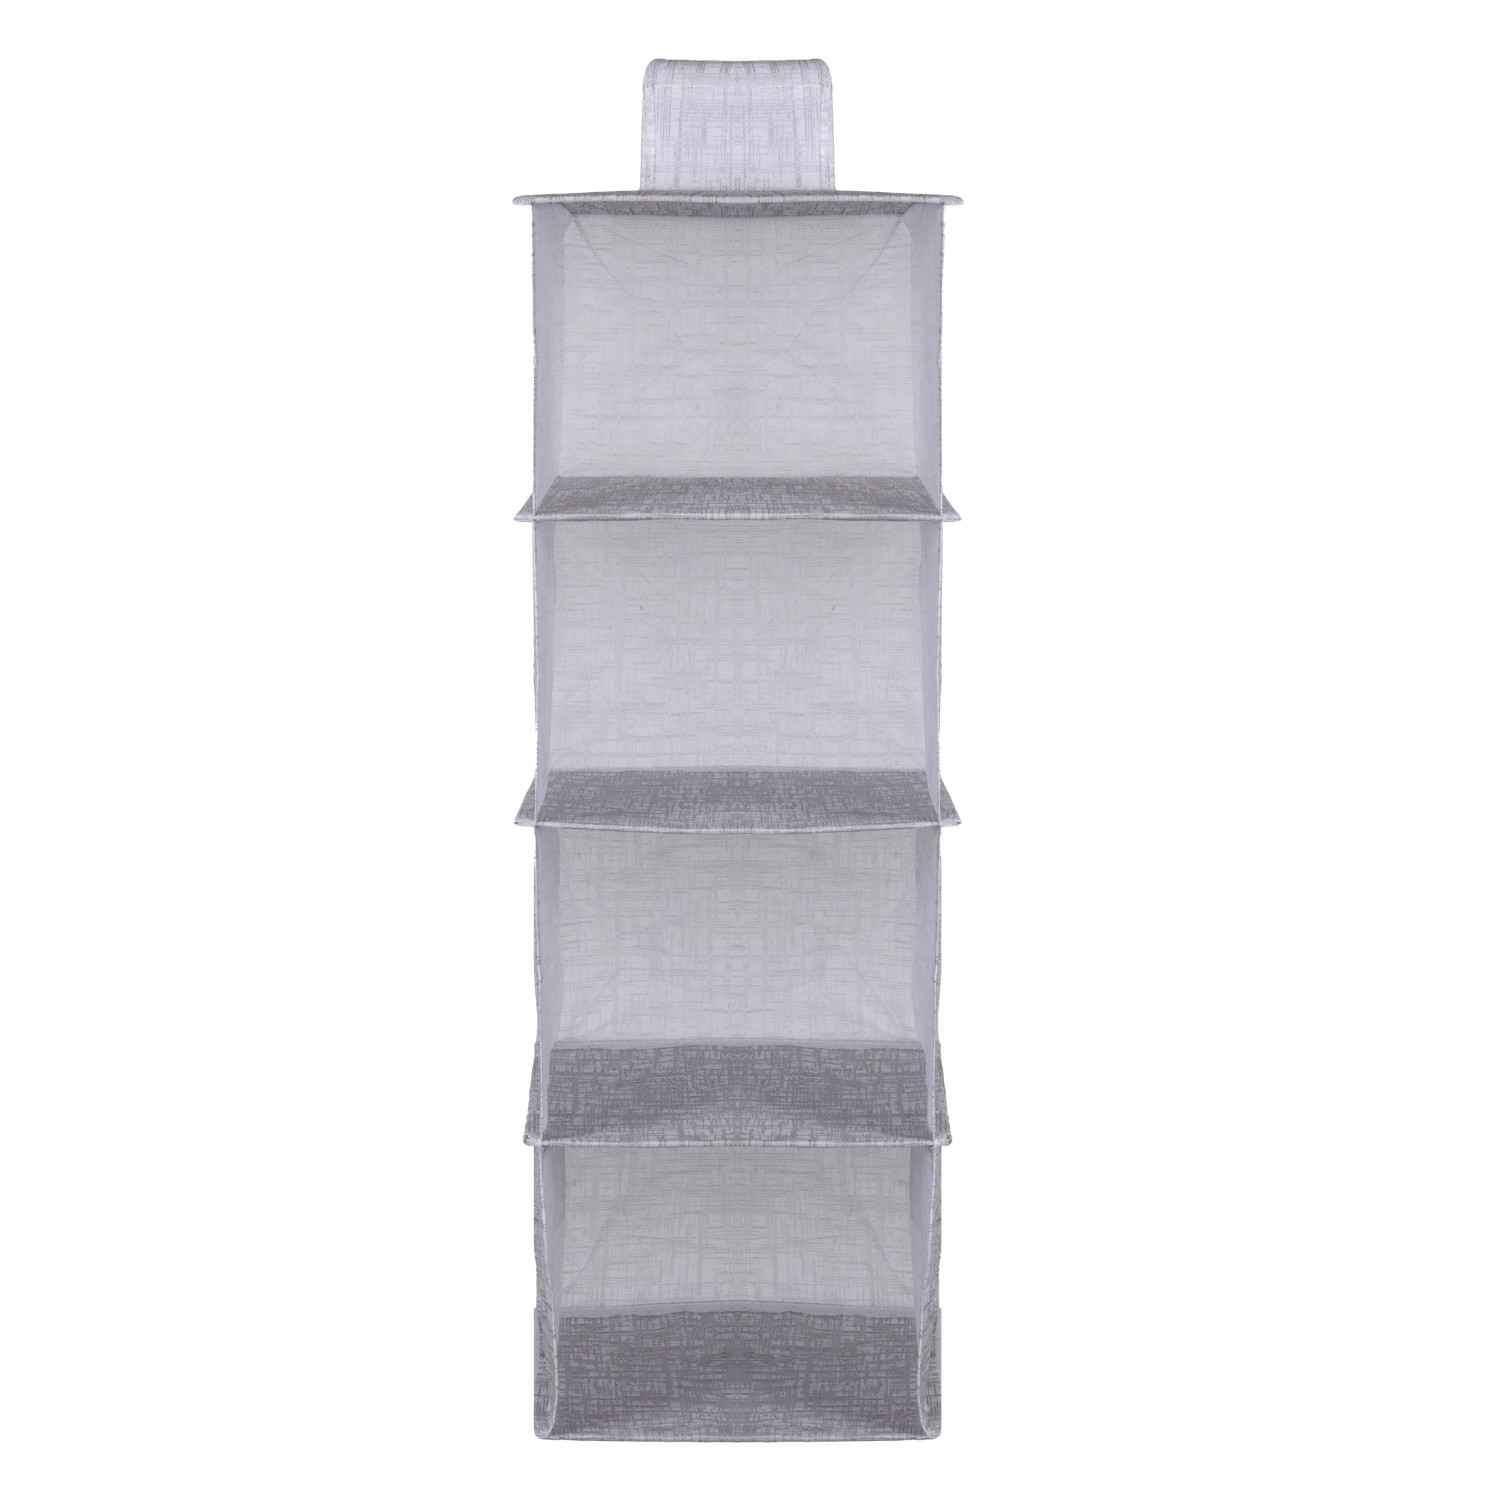 Kuber Industries Shoe Rack | 4 Shelf Foldable Storage Rack | Clothes Hanging Organizer | Shoe Storage Organizer | Closet Organizer with Velcro | Shoe Rack Jute Printed | Gray